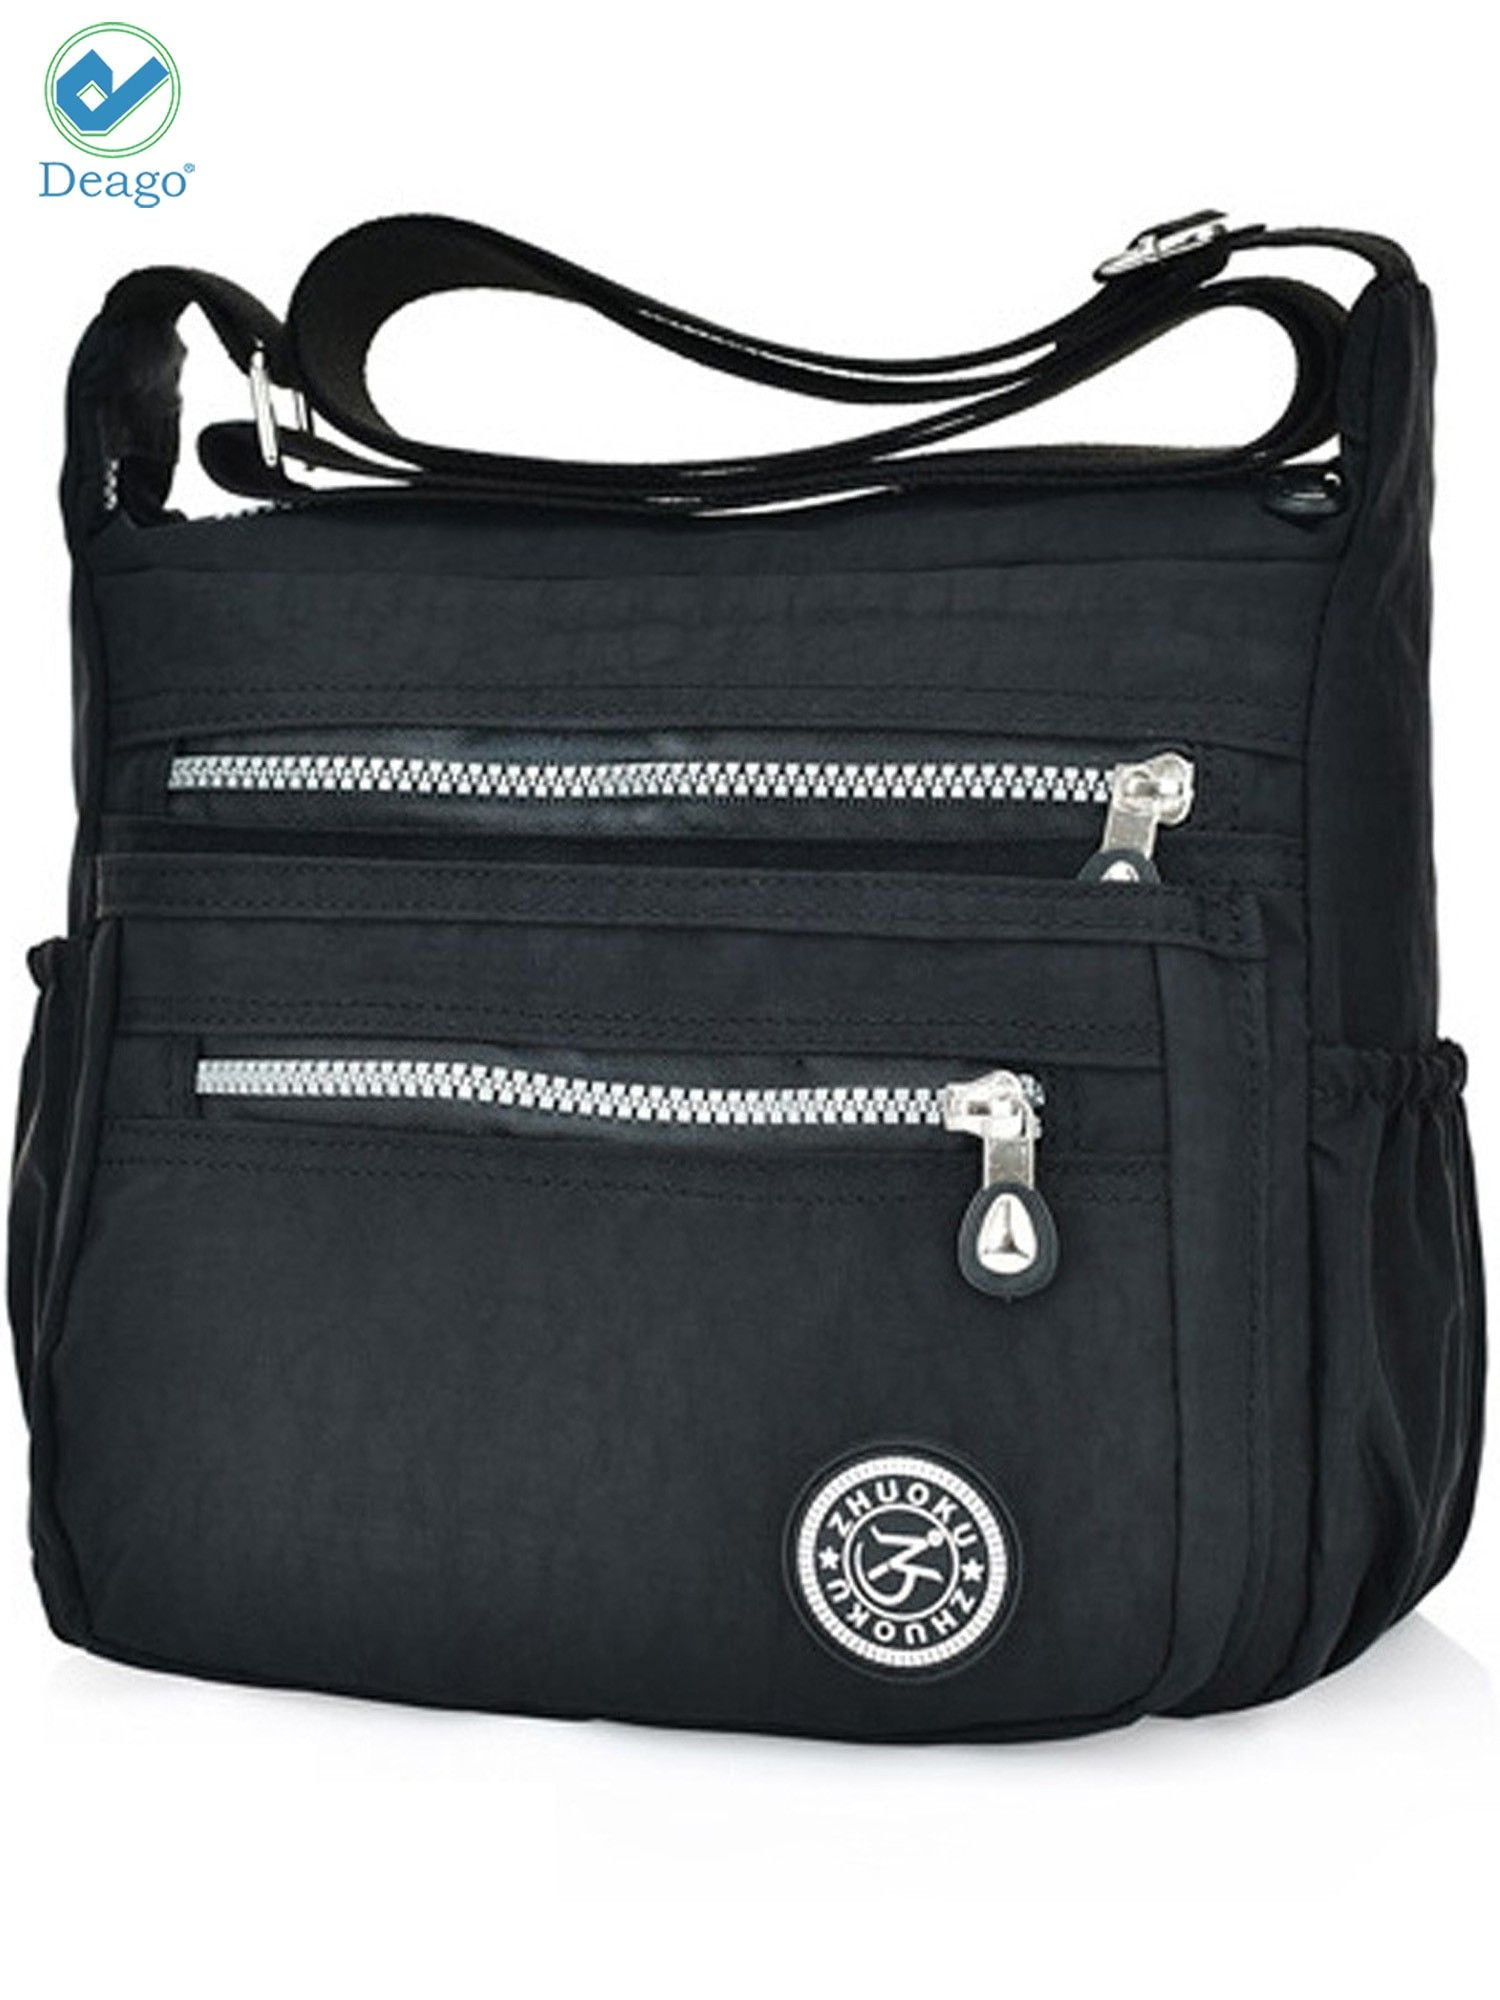 Deago - Deago Crossbody Bag for Women Waterproof Nylon Shoulder Bag ...